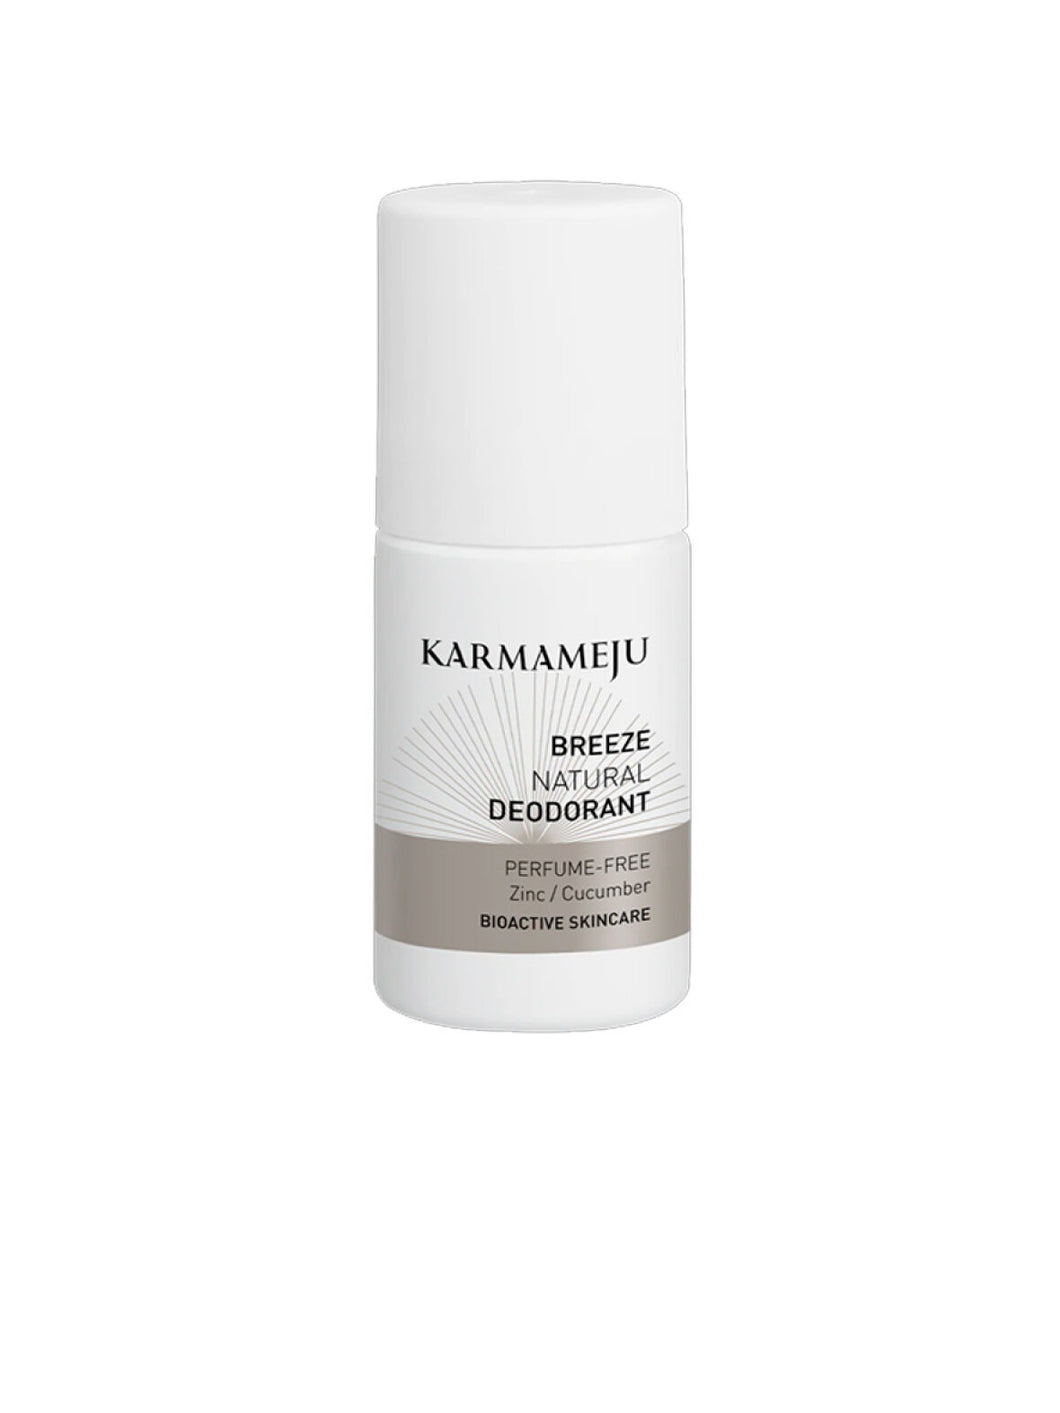 Karmameju Breeze deodorant PERFUME-FREE